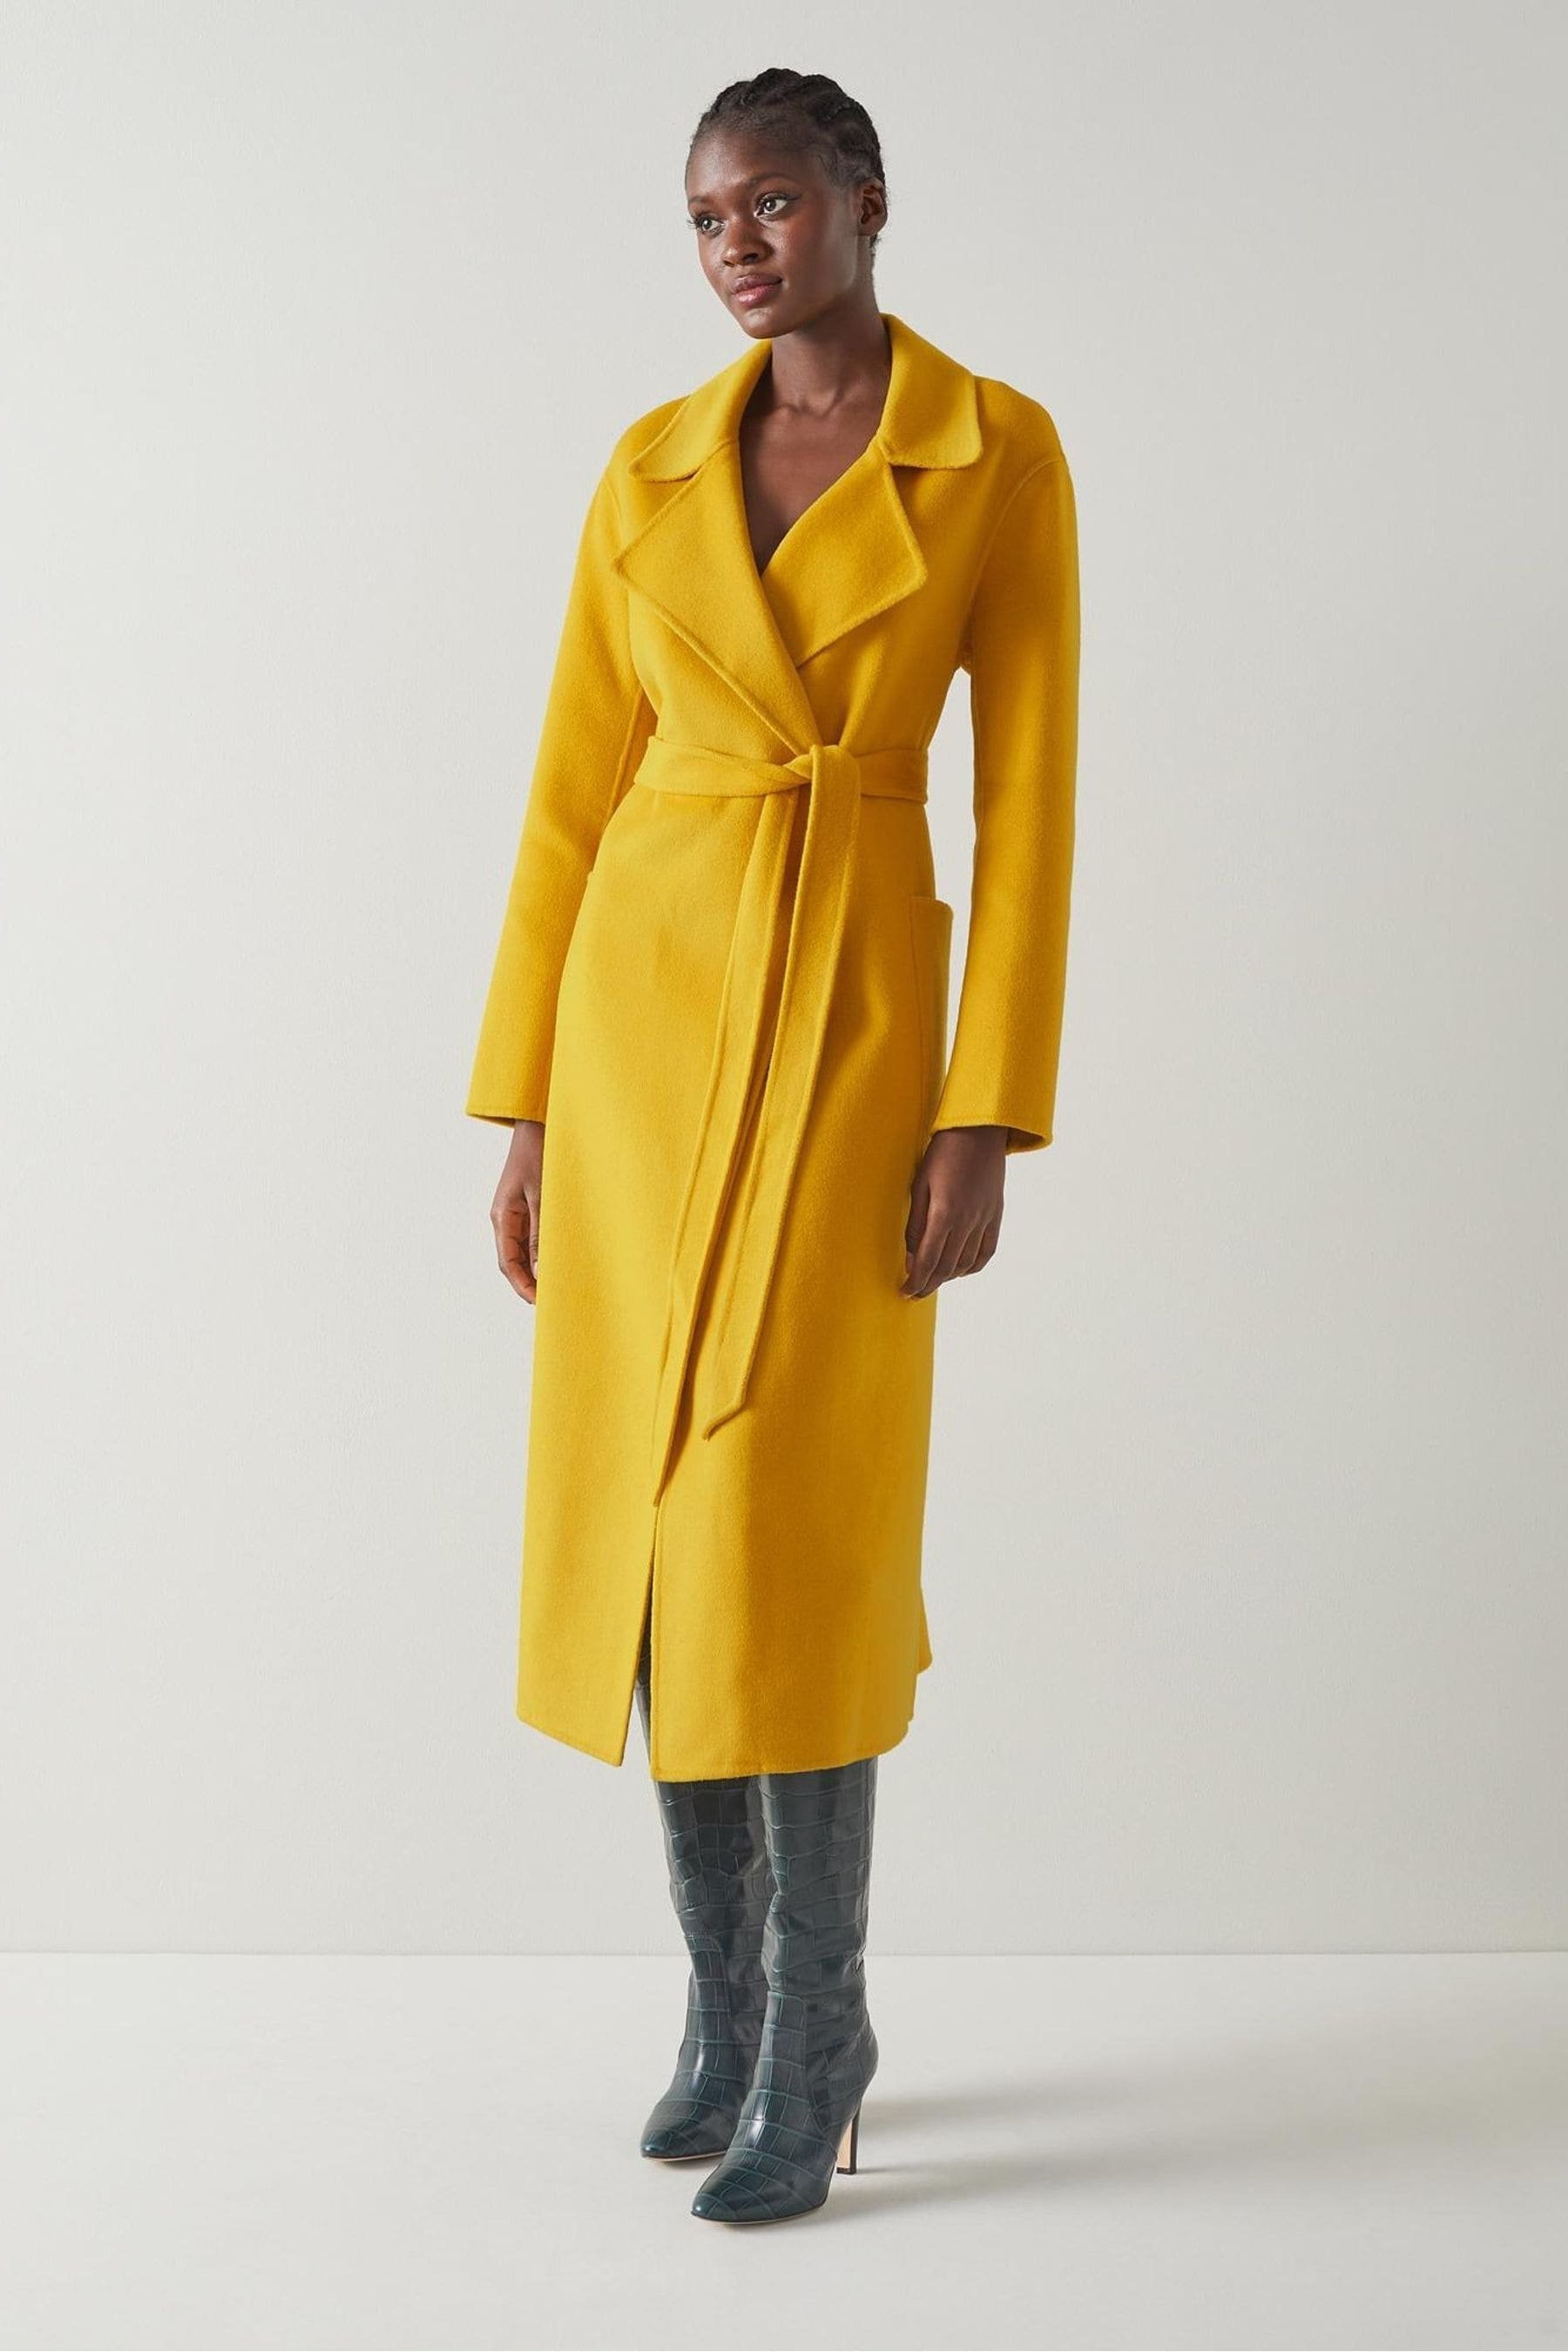 L.K.Bennett Anderson Yellow Double-Faced Wool Coat €637, 